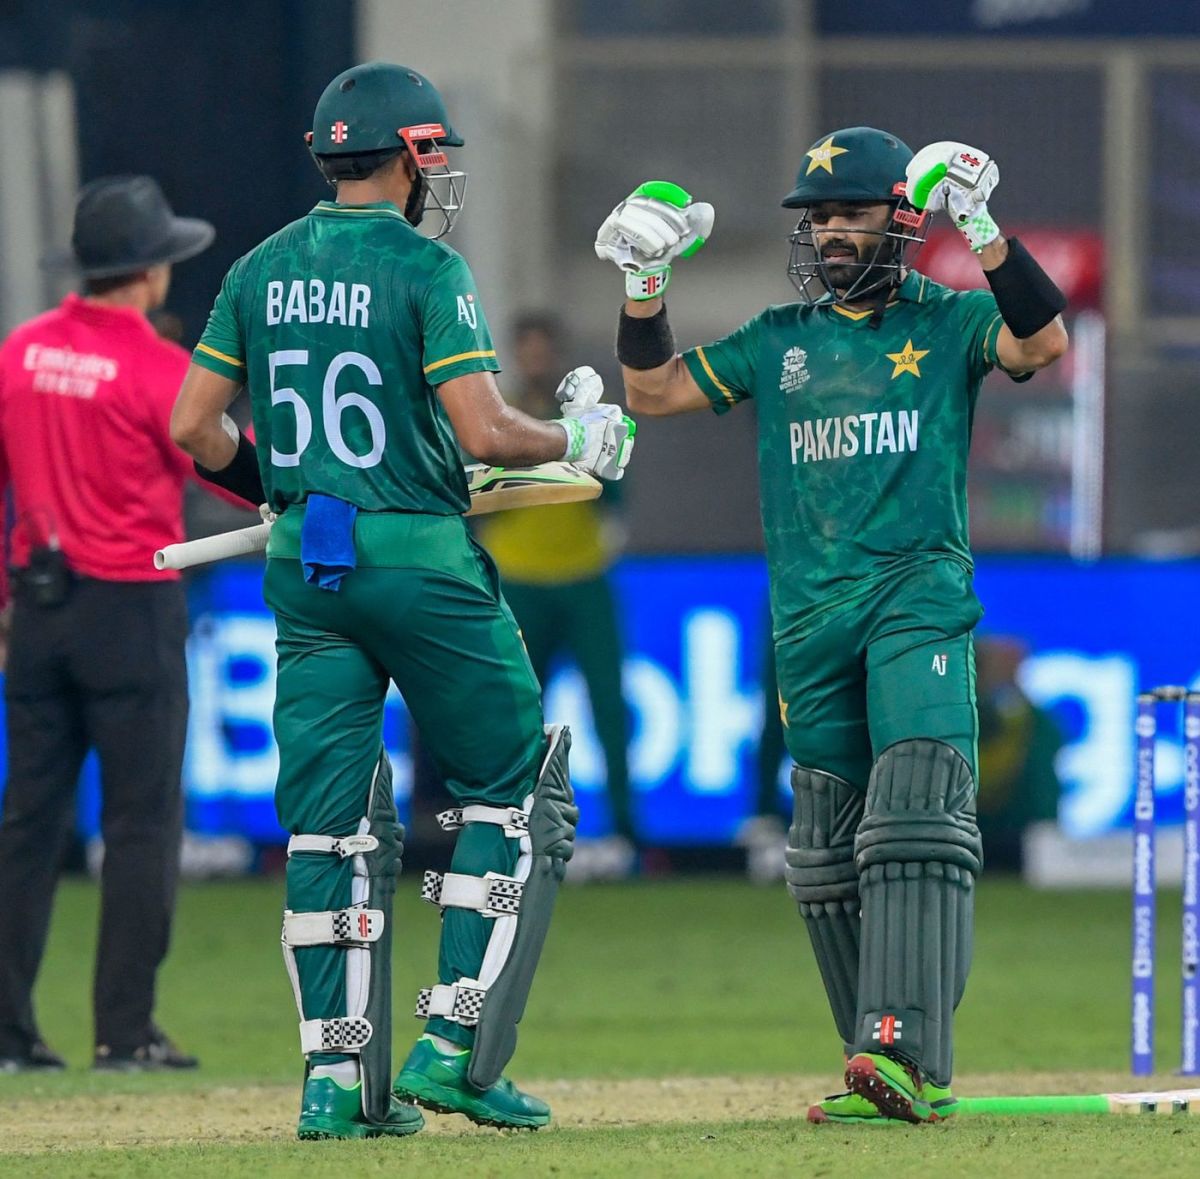 Mohammad Rizwan celebrates after reaching his half-century, India vs Pakistan, T20 World Cup, Group 2, Dubai, October 24, 2021